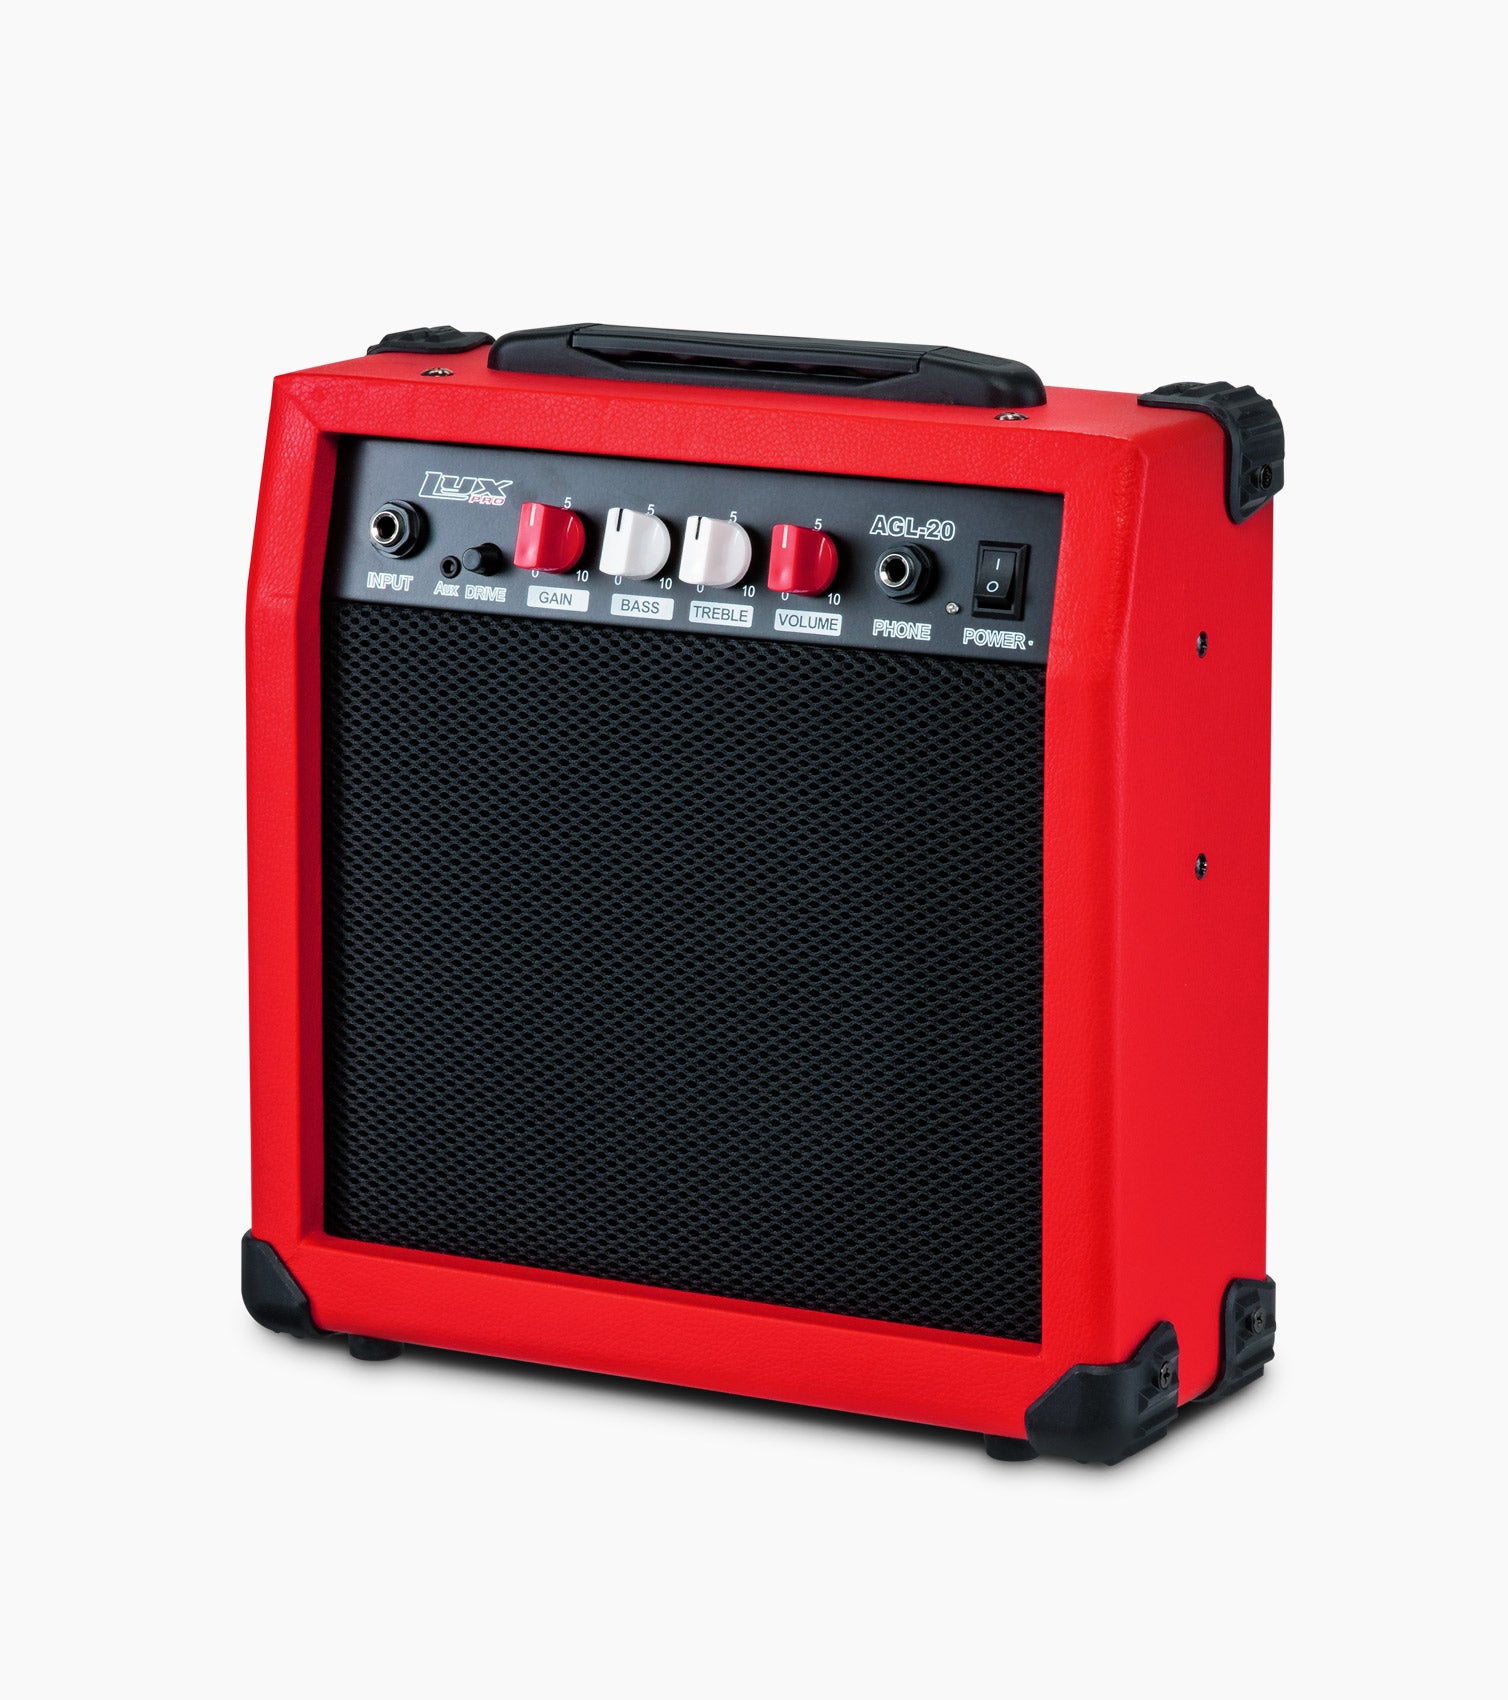 close-up of red 20 watt electric guitar amplifier controls